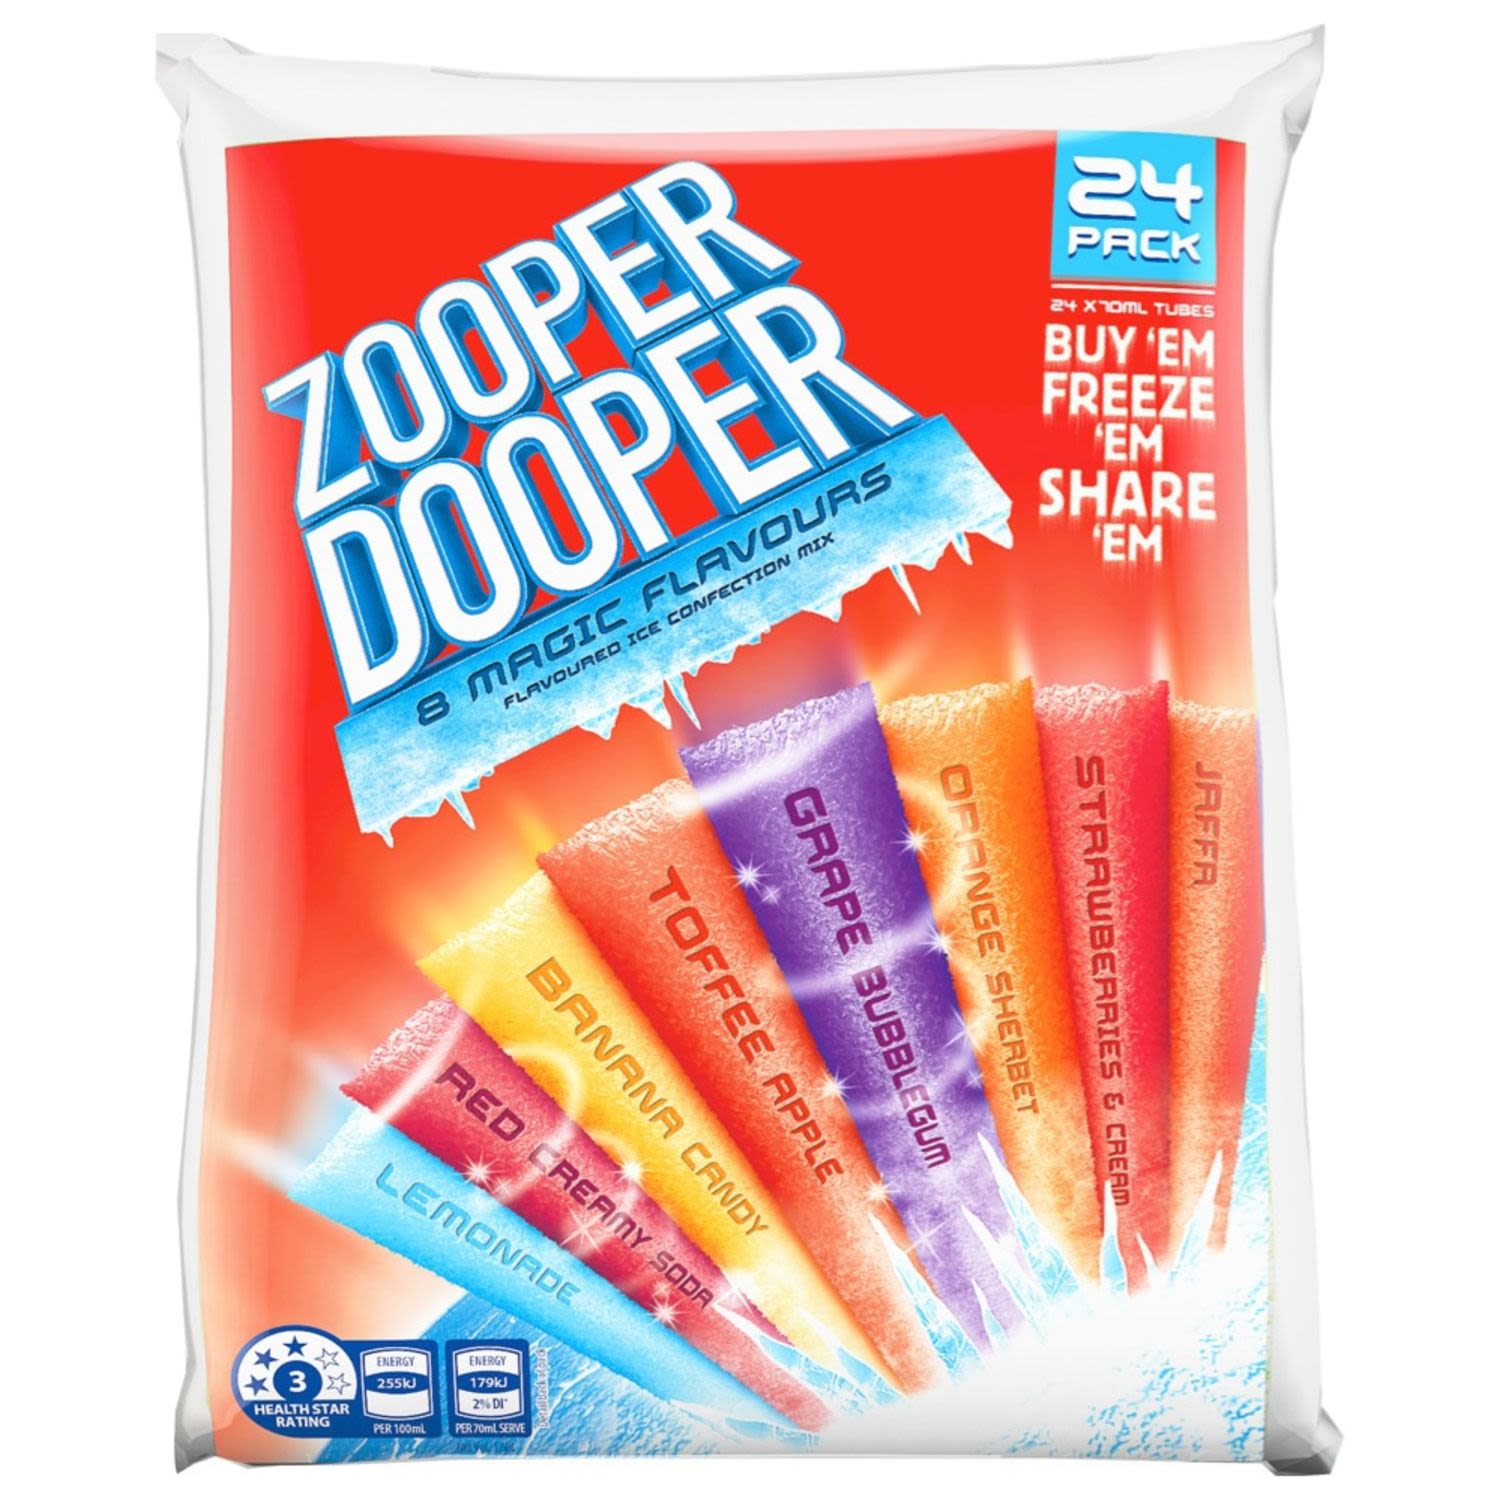 Zooper Dooper Magic, 24 Each